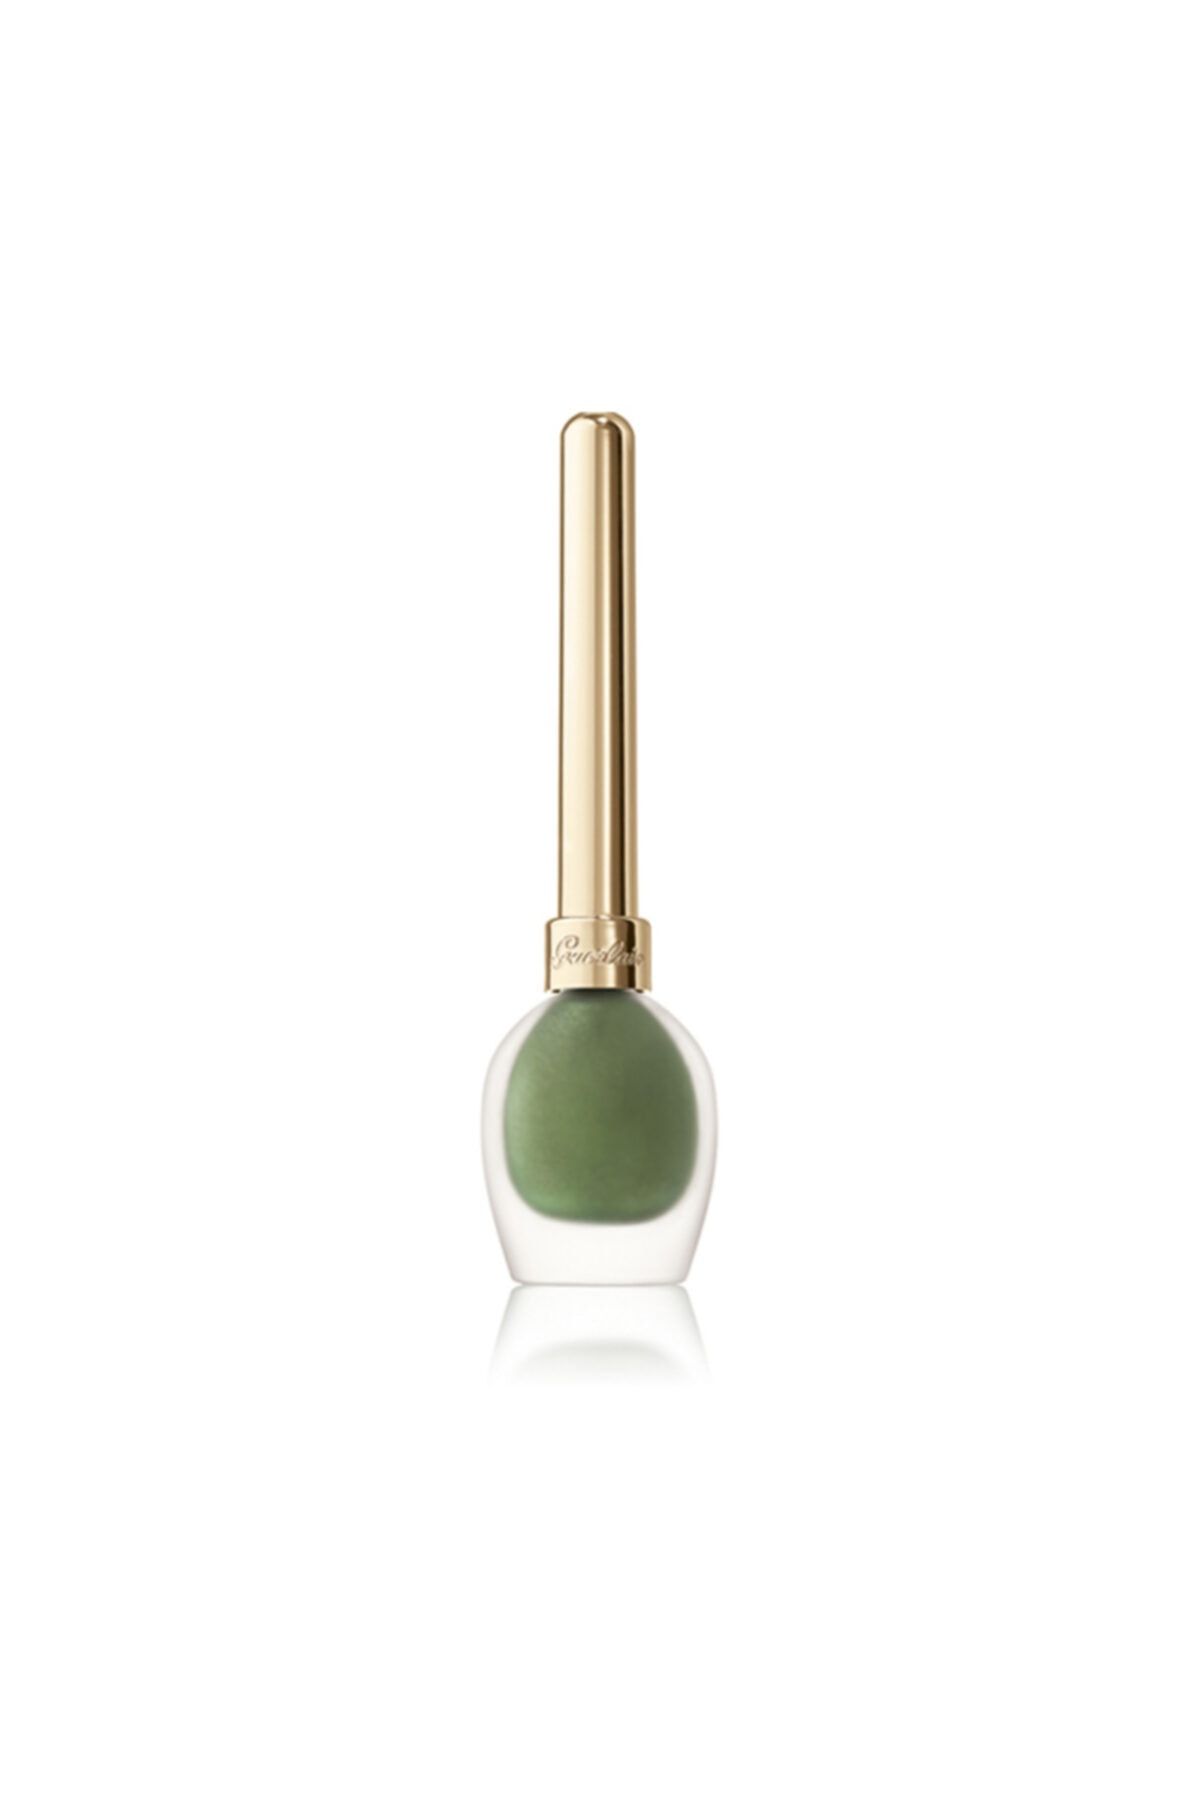 Guerlain Liquid Metallic To Glittery Emerald 02 Eyeliner